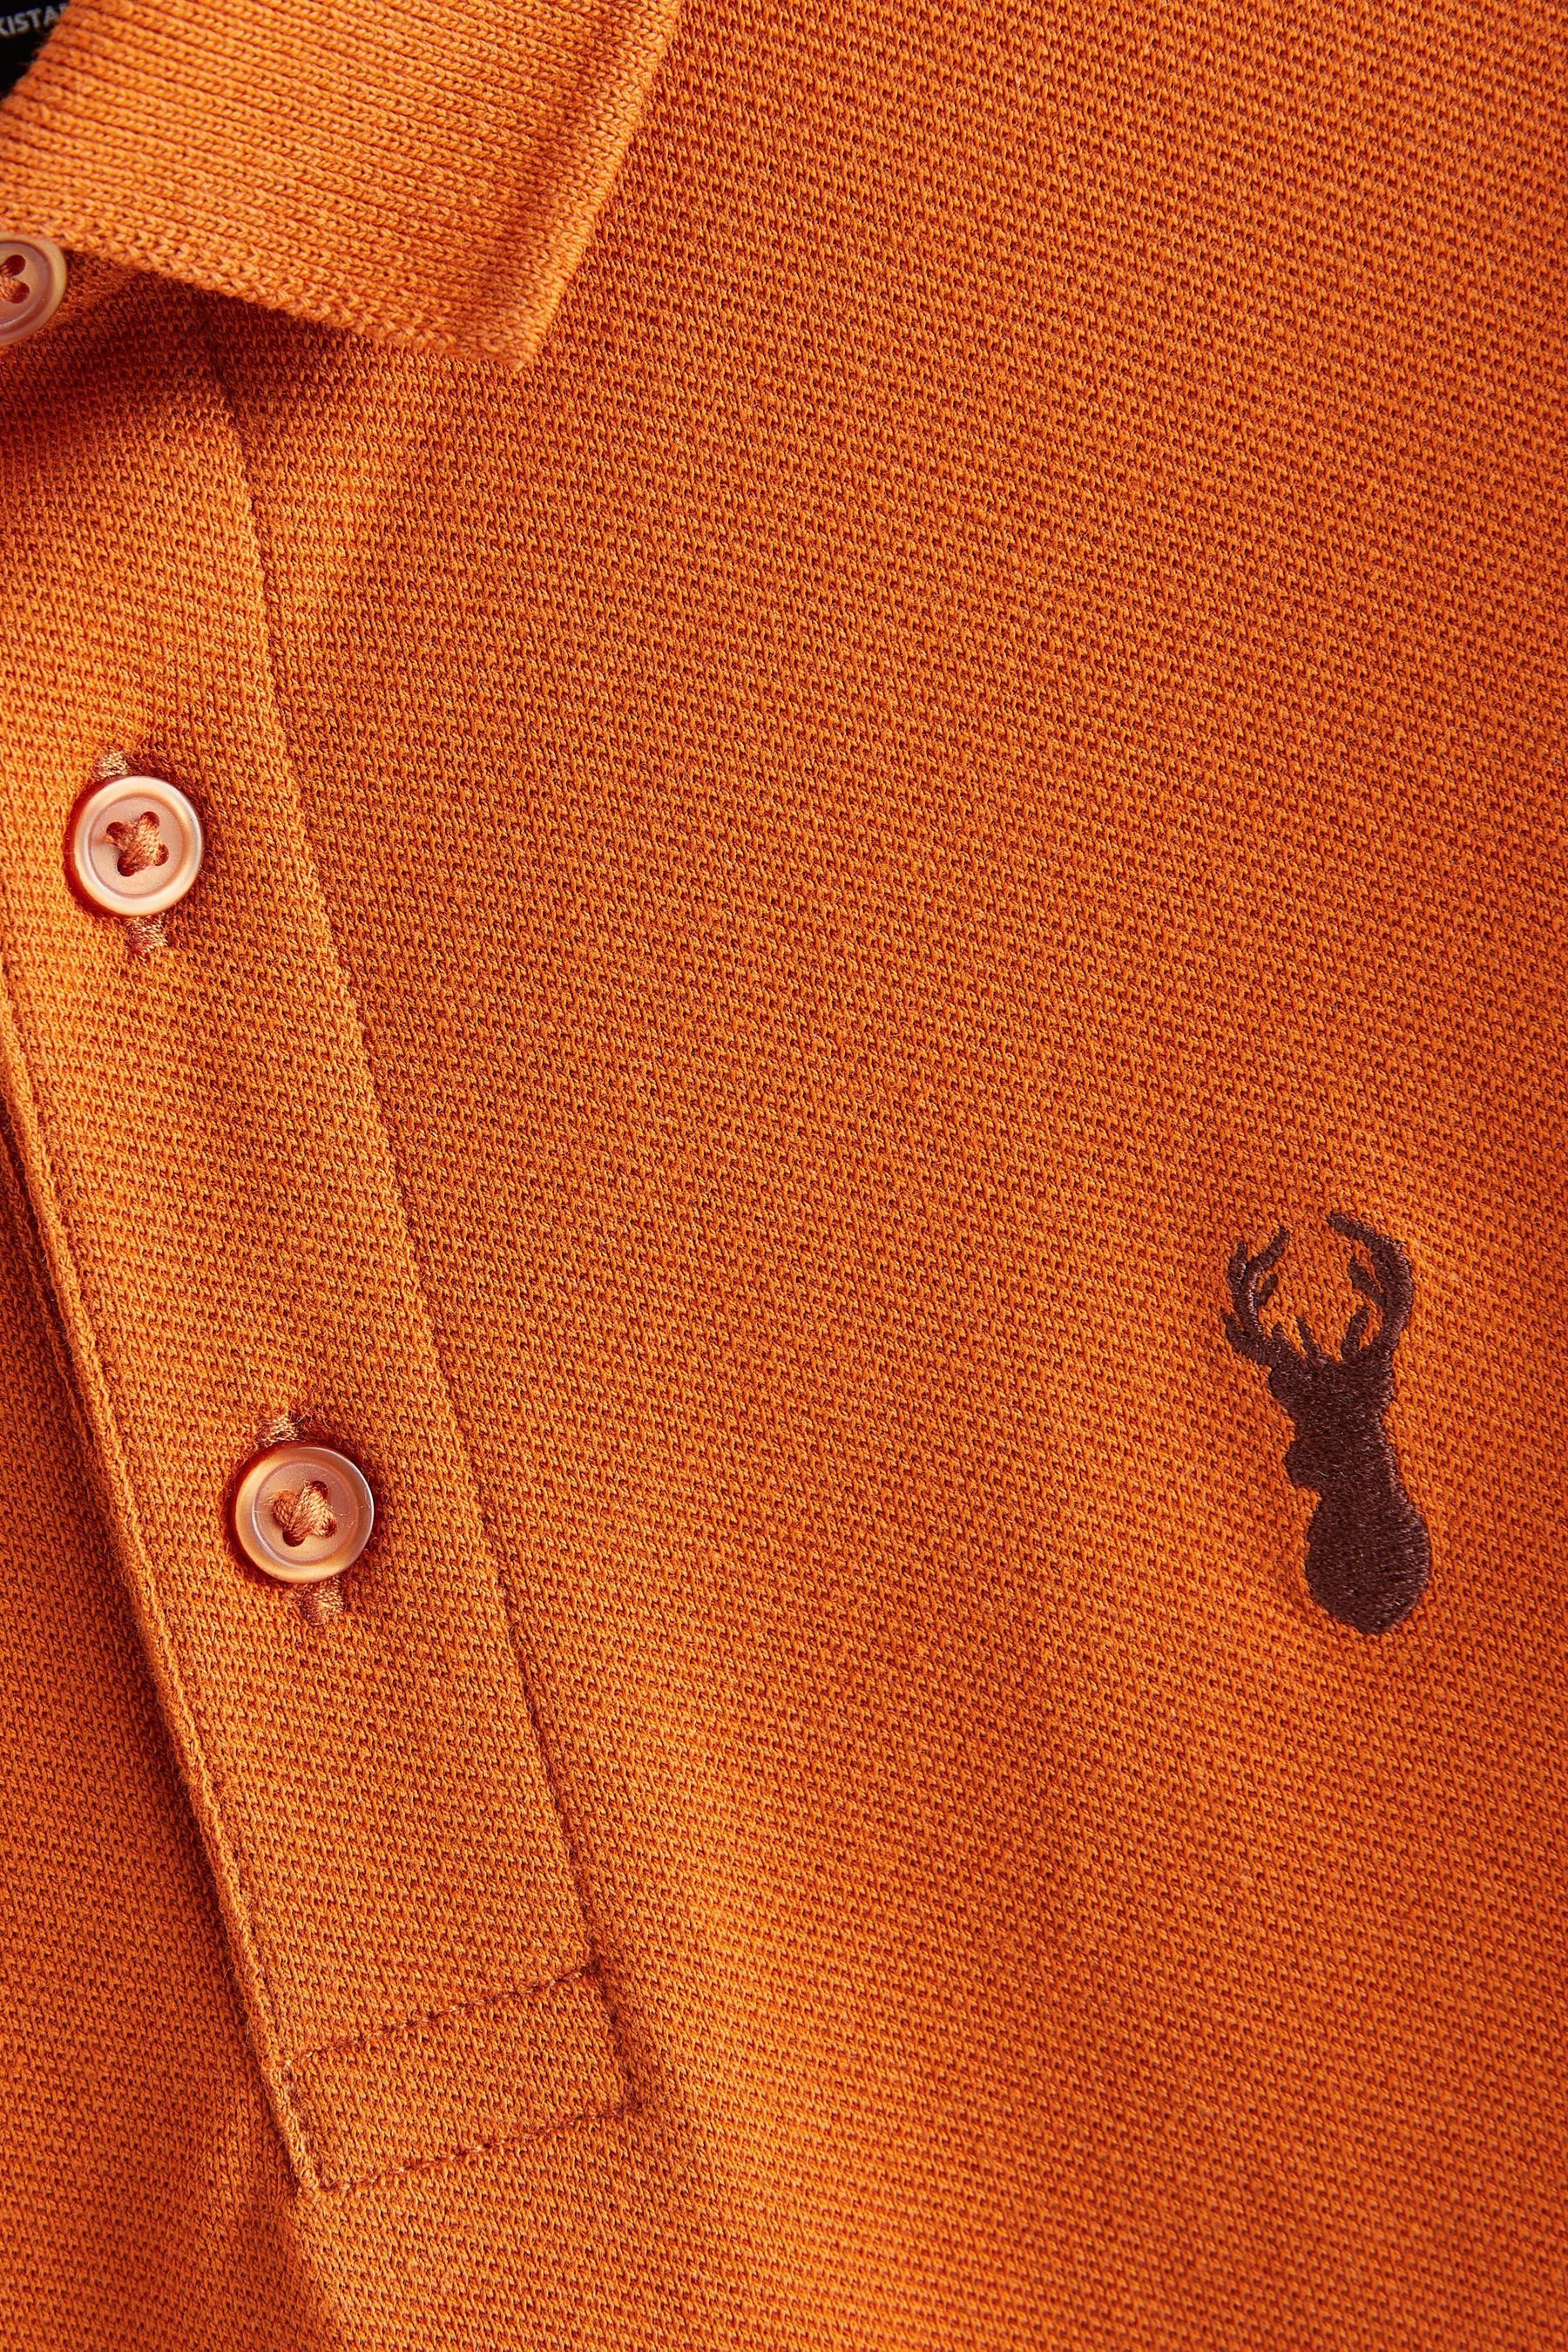 Next Poloshirt Kurzärmeliges Orange Polo-Shirt (1-tlg) Burnt